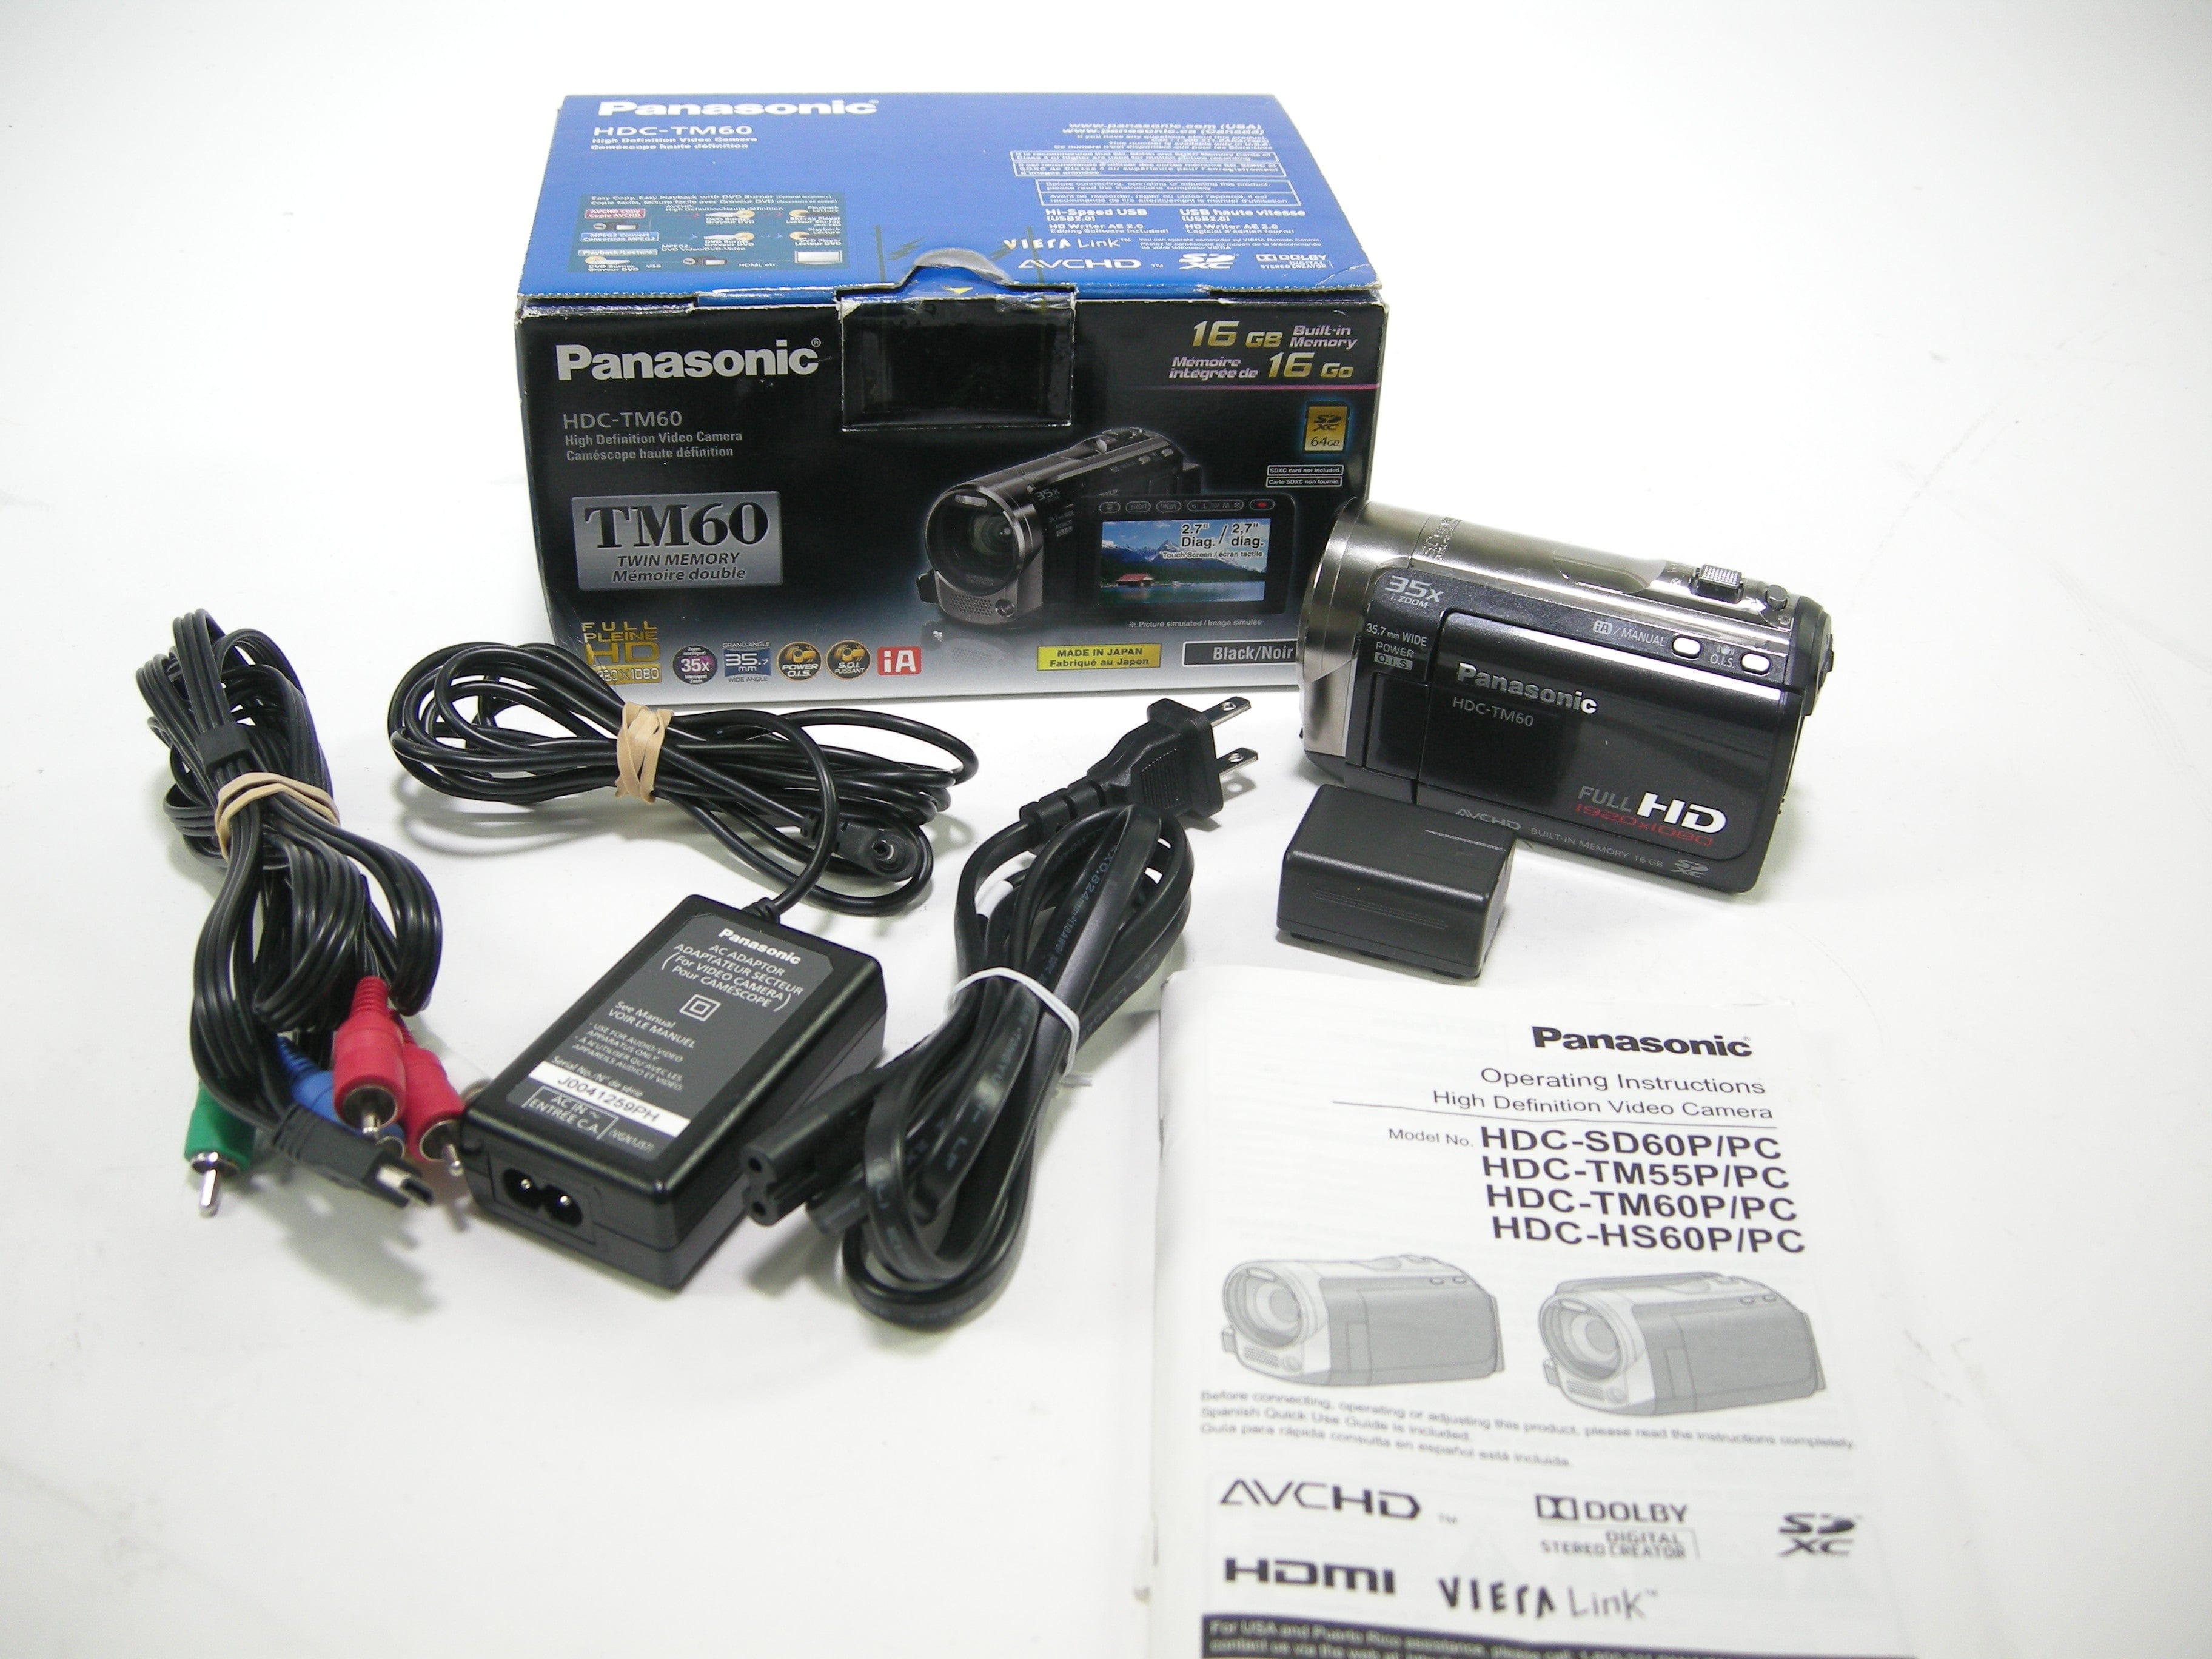 Panasonic HDC-TM60 Full HD Video Camera